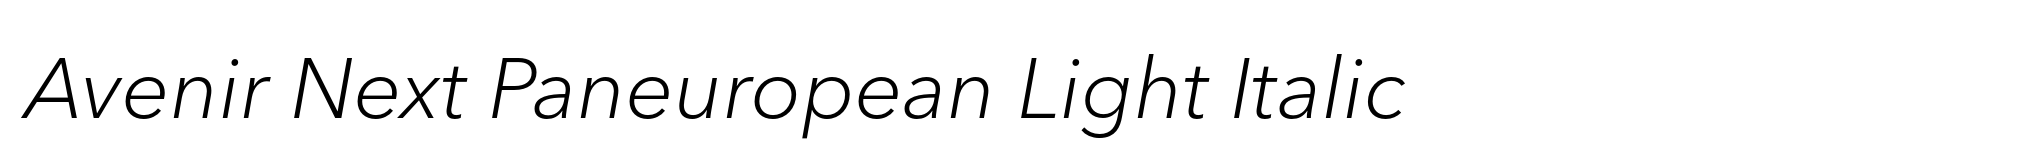 Avenir Next Paneuropean Light Italic image